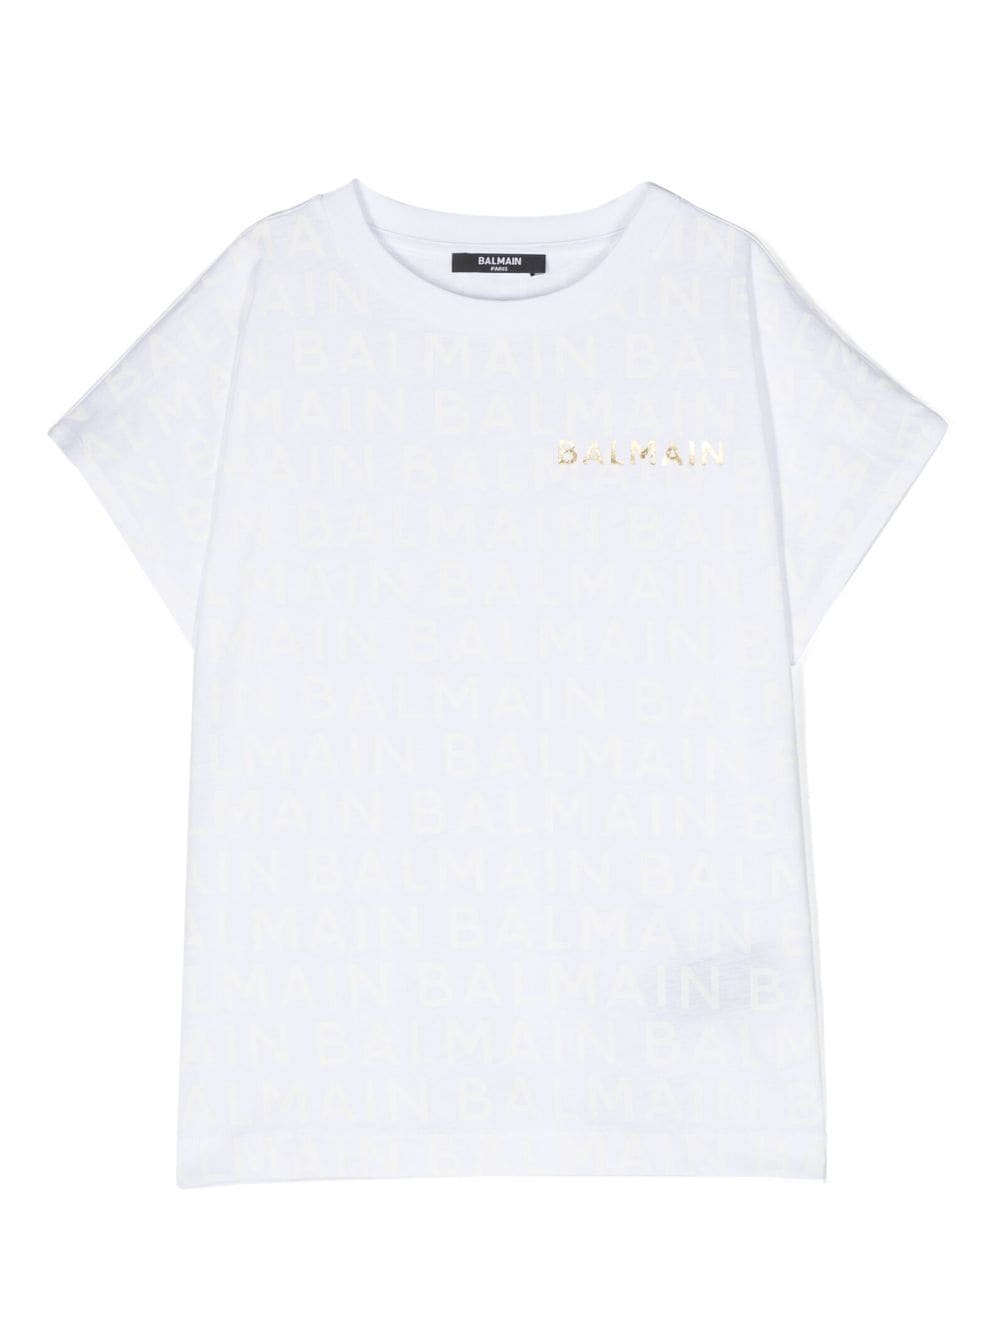 T-shirt bianca bambina con stampa color oro